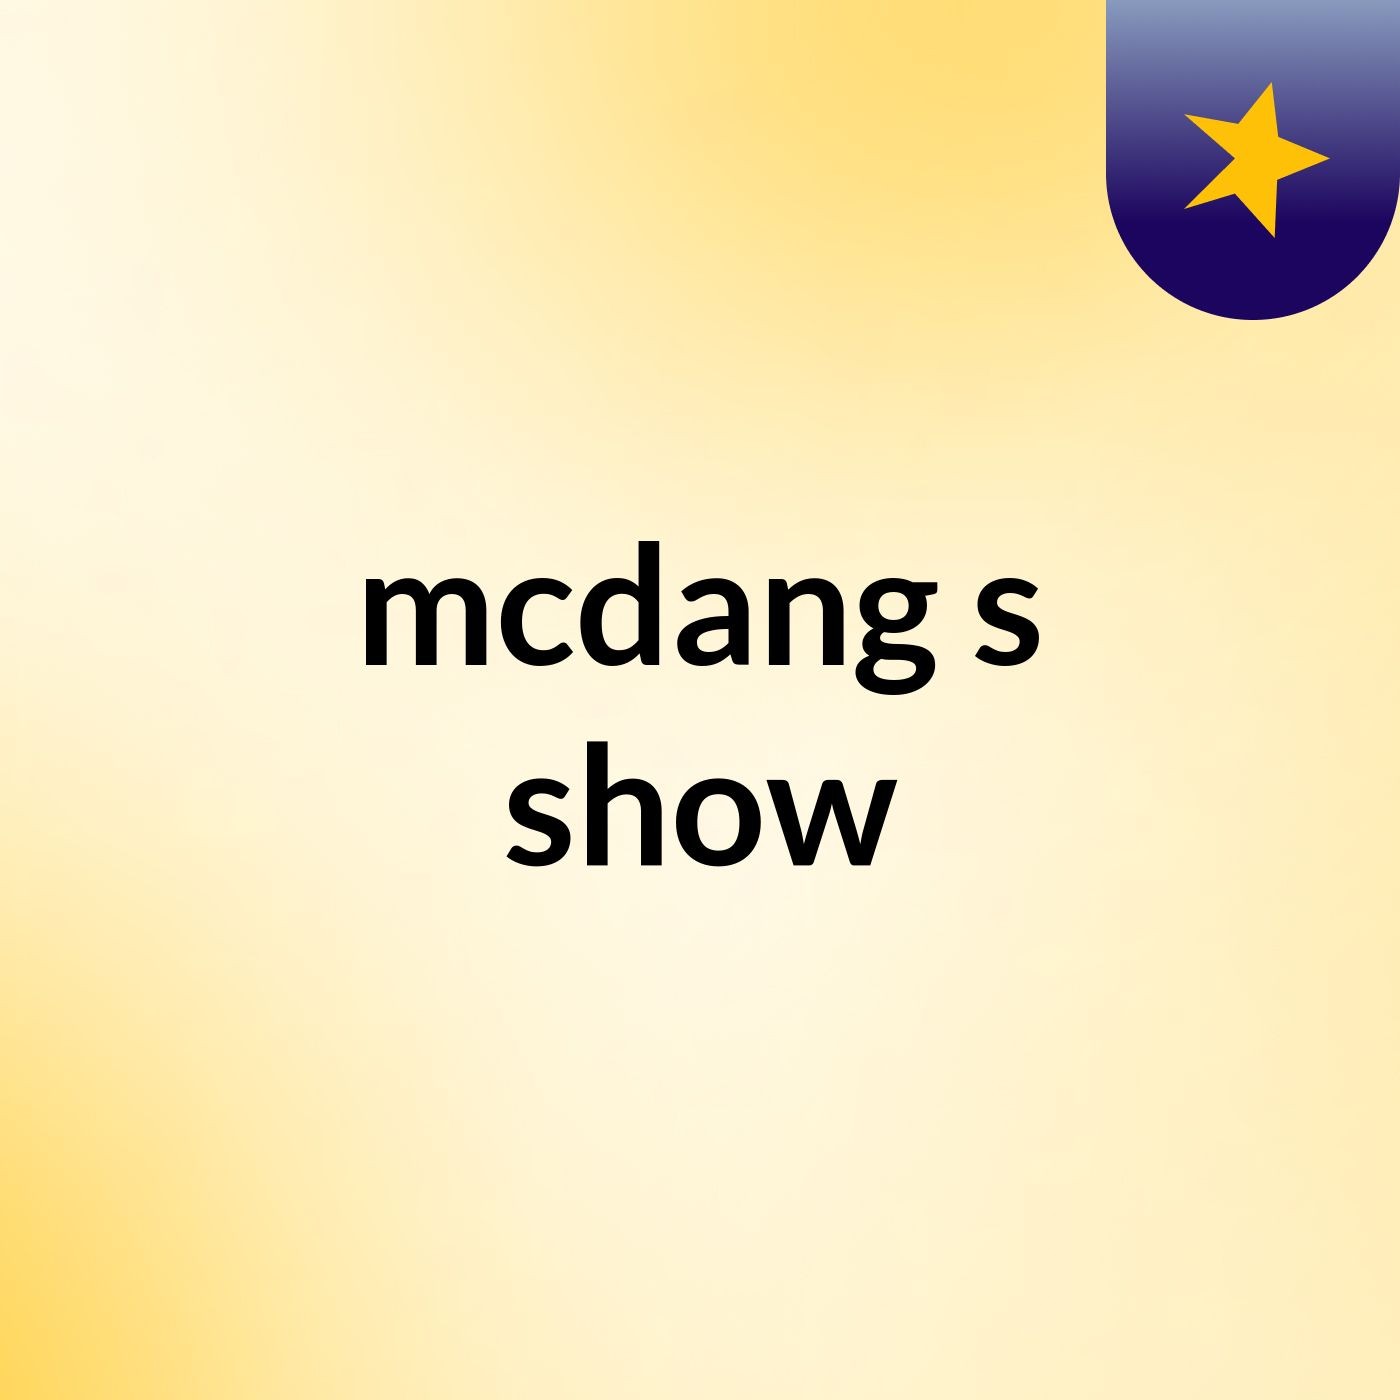 mcdang's show